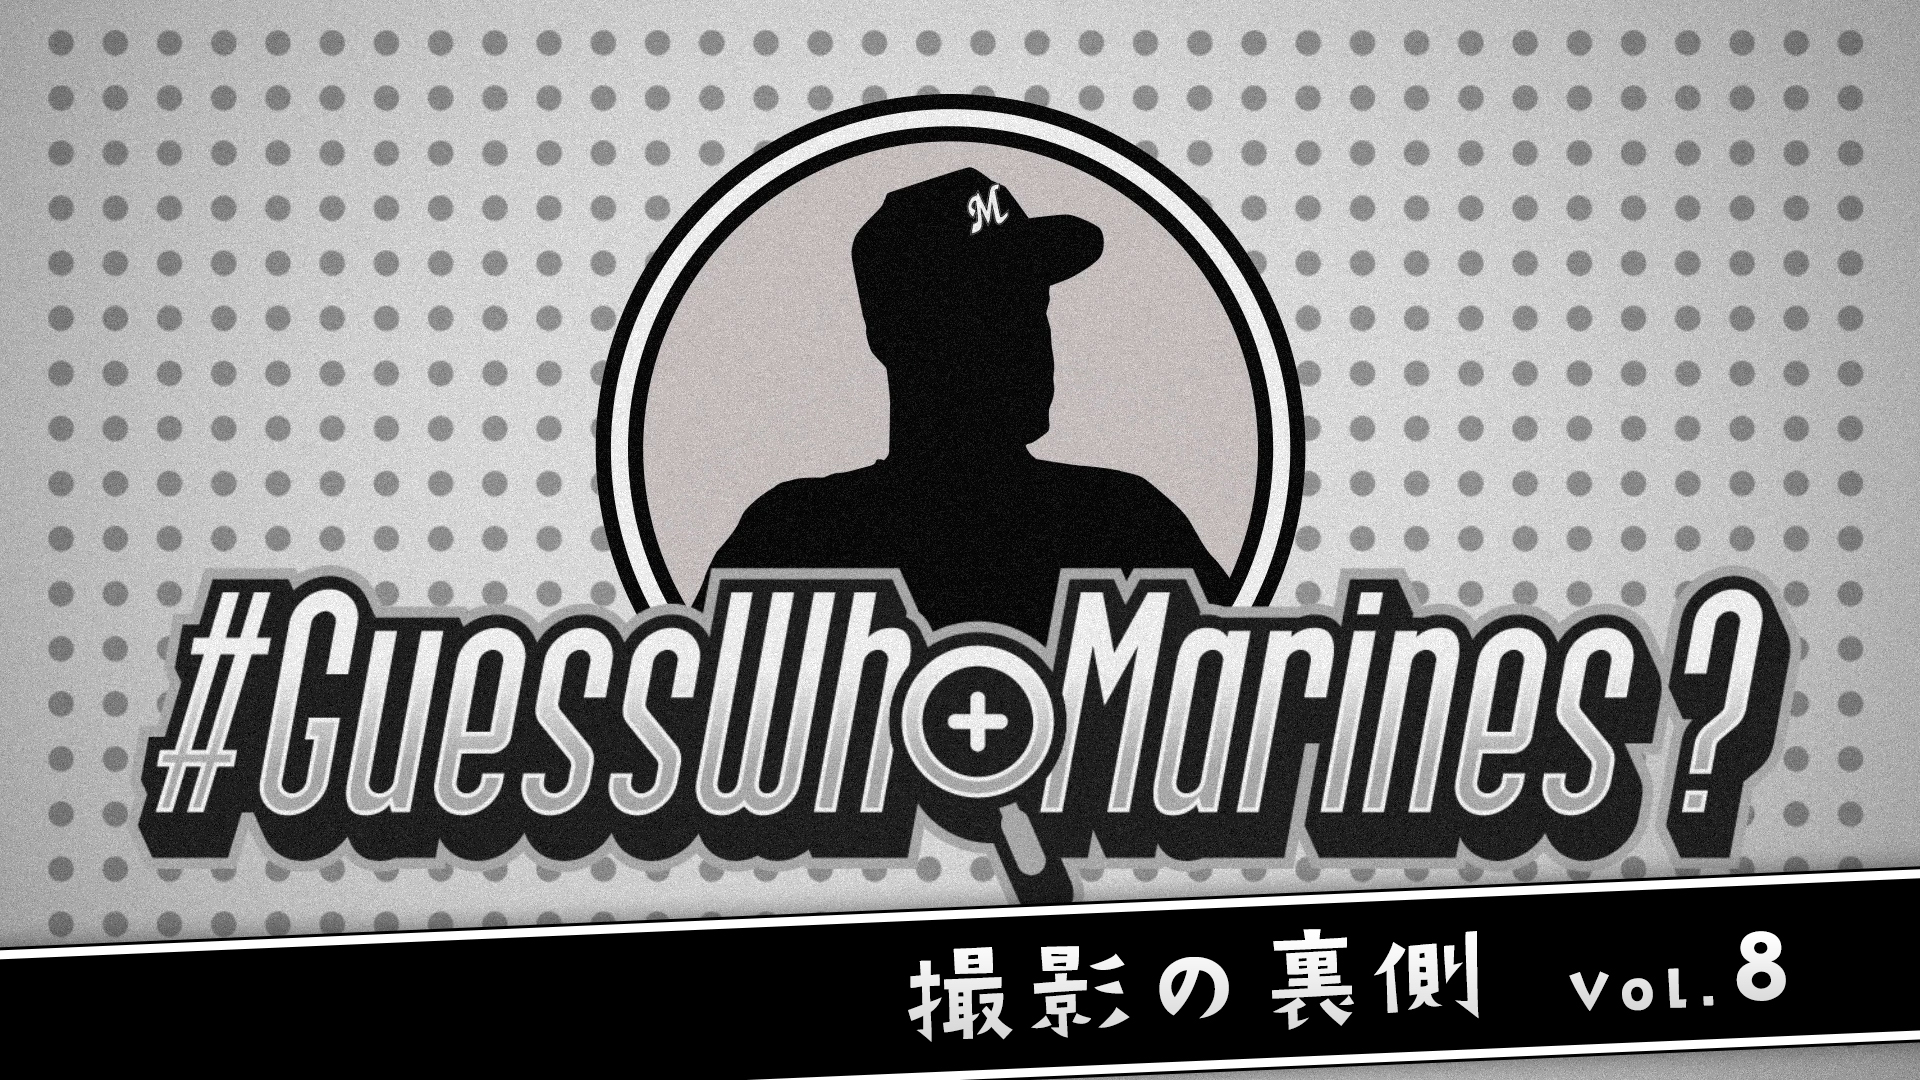 『Guess Who Marines?』撮影の裏側Vol8.【MARINESPLUS】